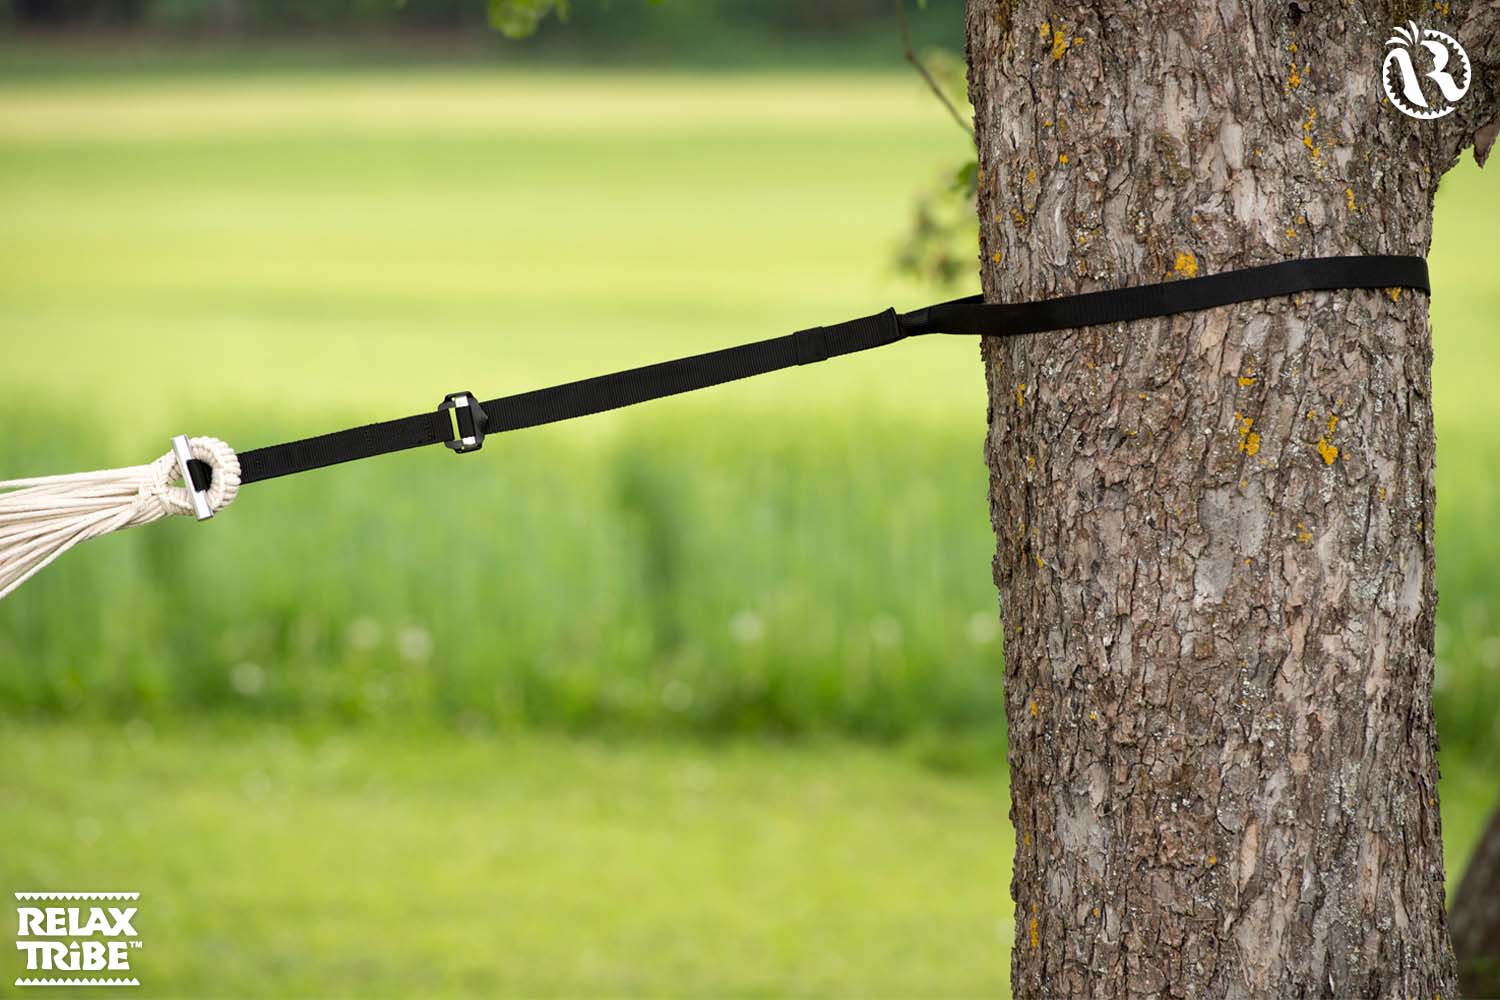 t-strap-adjustable-suspension-system-set-with-tree-friendly-straps-max-200kg-2x-220cm-for-hammock-weatherproof-black-outdoor